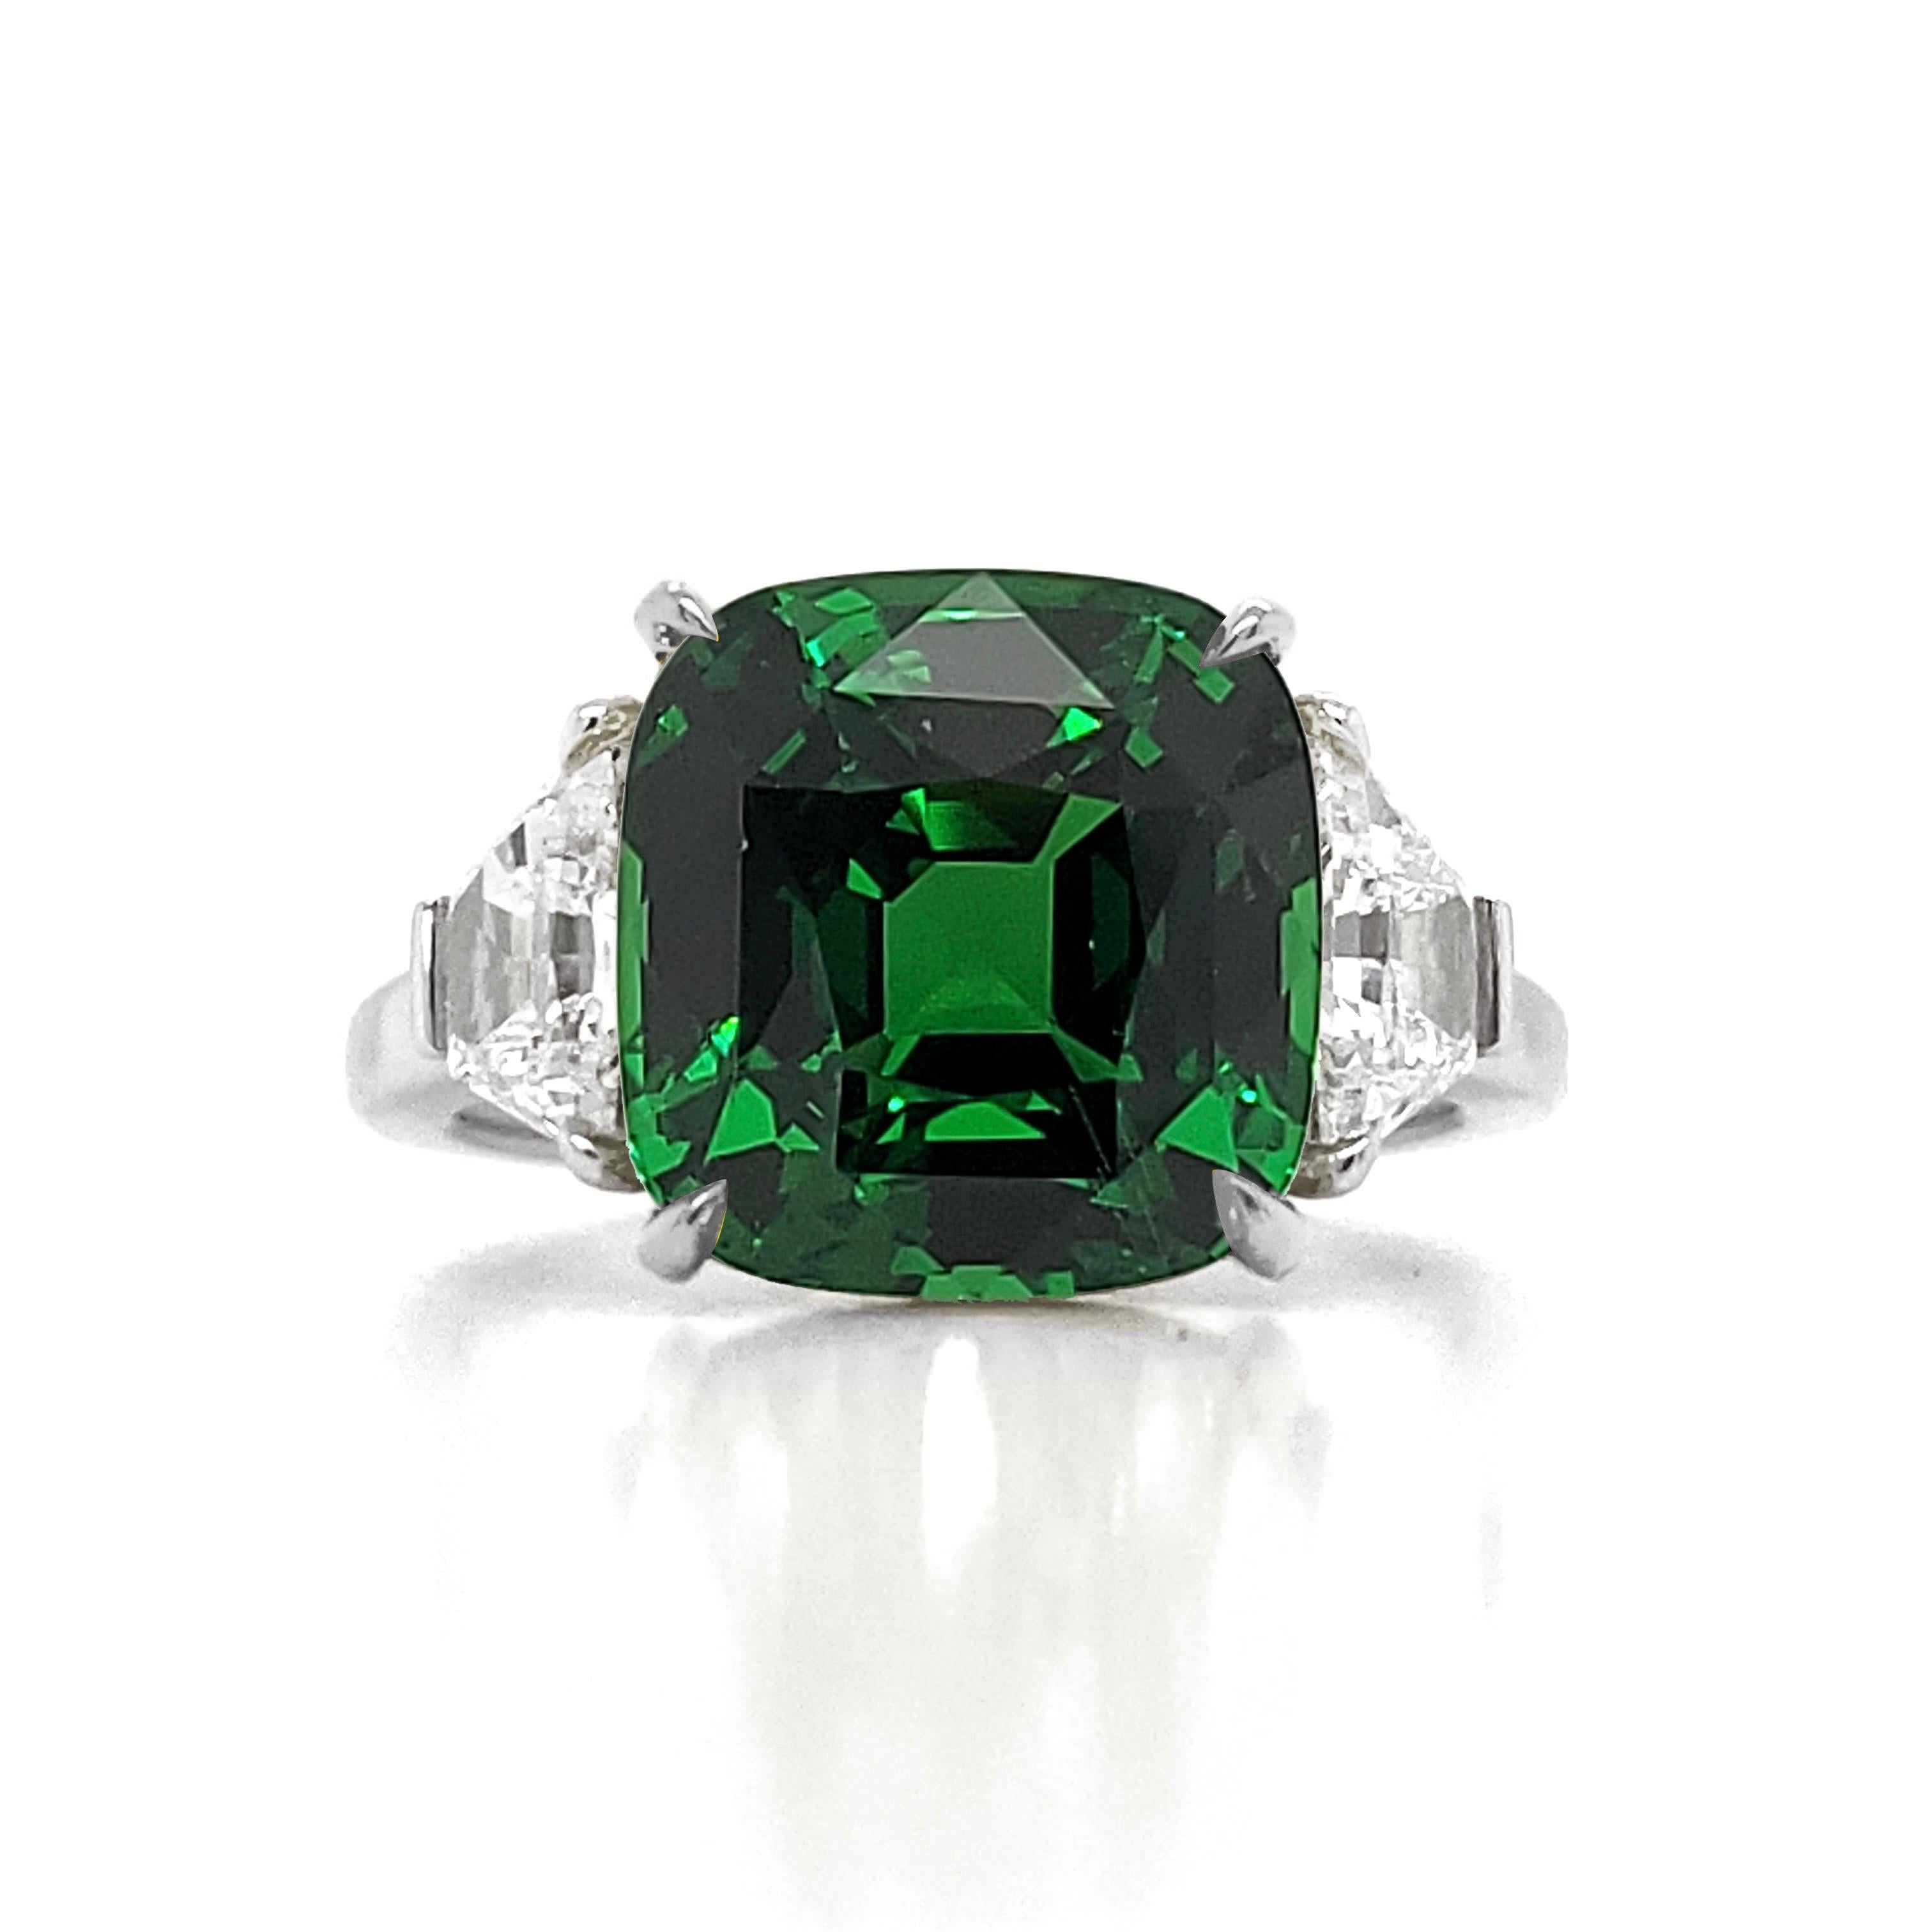 Cushion Cut Emilio Jewelry Certified 5.75 Carat Vivid Green No Heat Tsavorite Ring For Sale